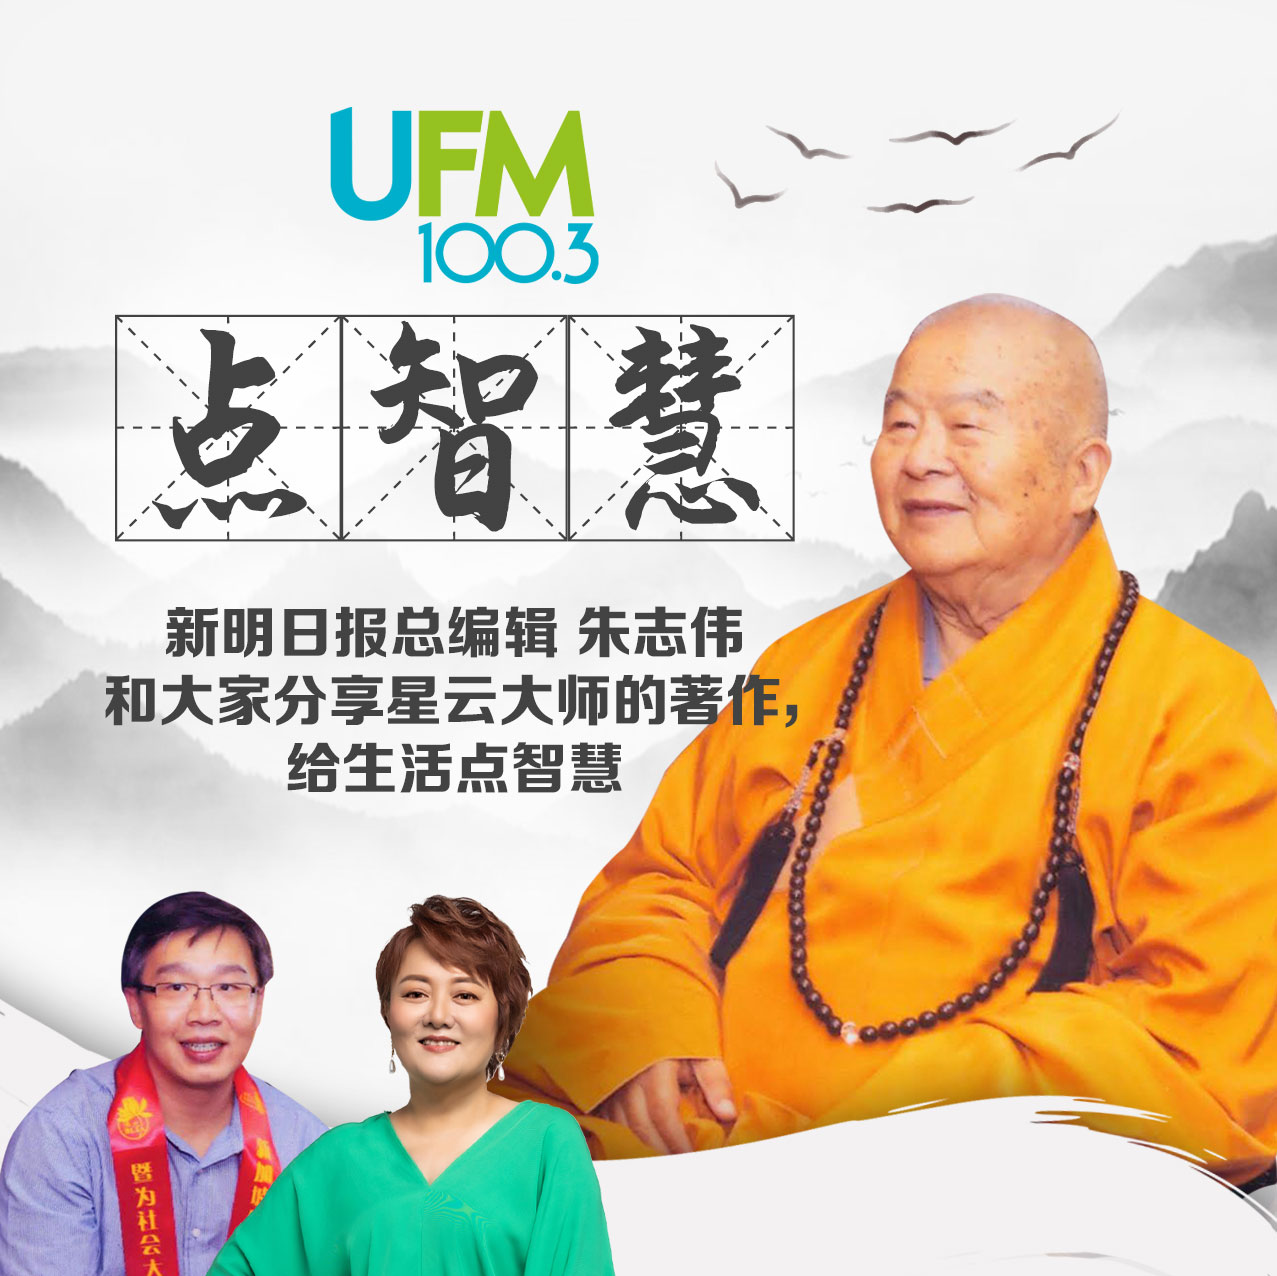 UFM 100.3 点智慧